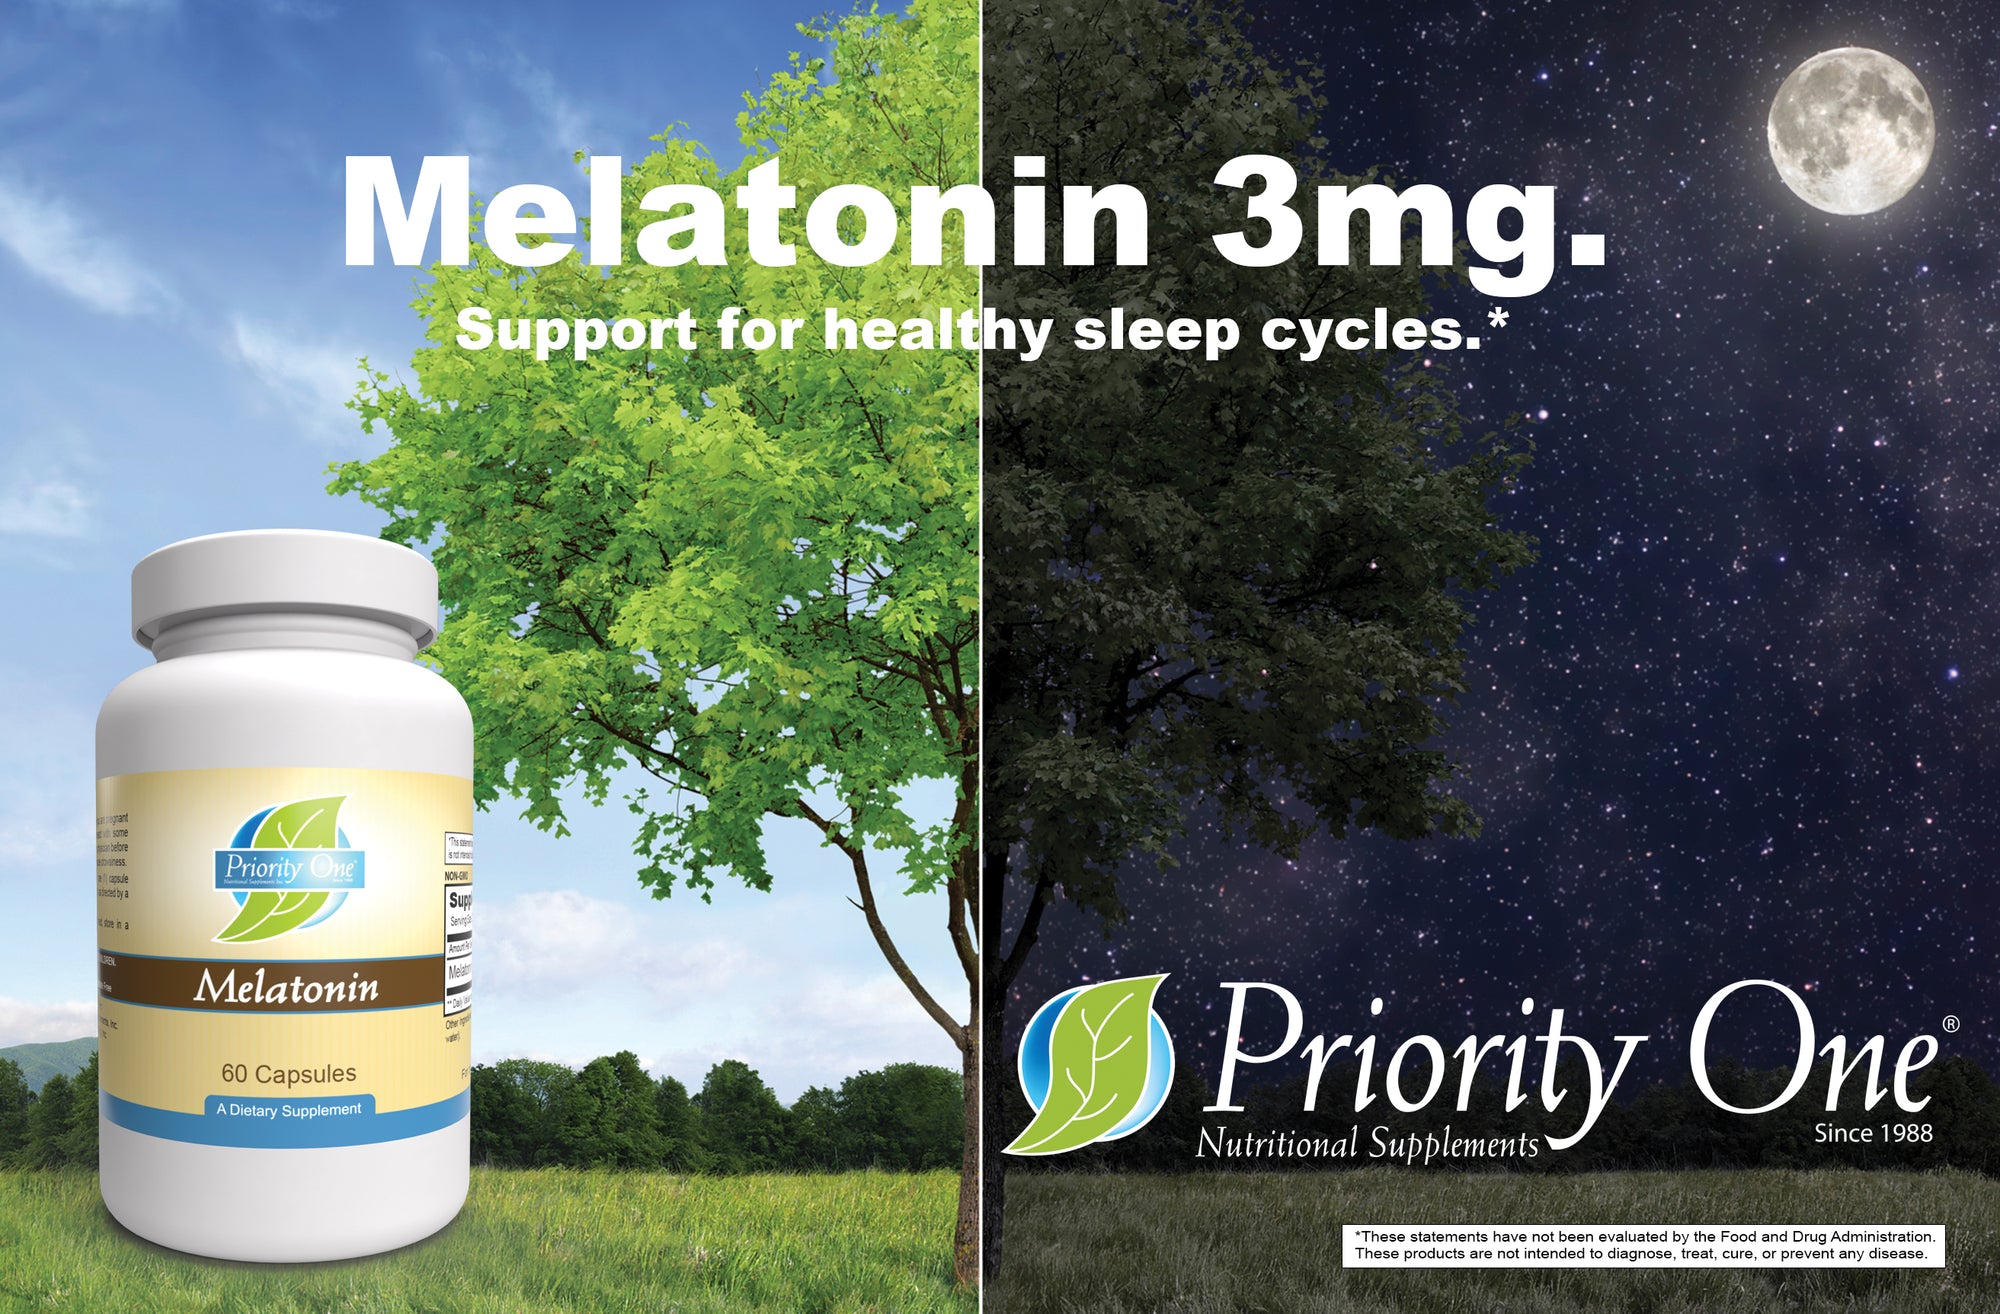 Melatonin (60 Capsules) Melatonin sleep supplements support the body’s natural sleep cycle.*